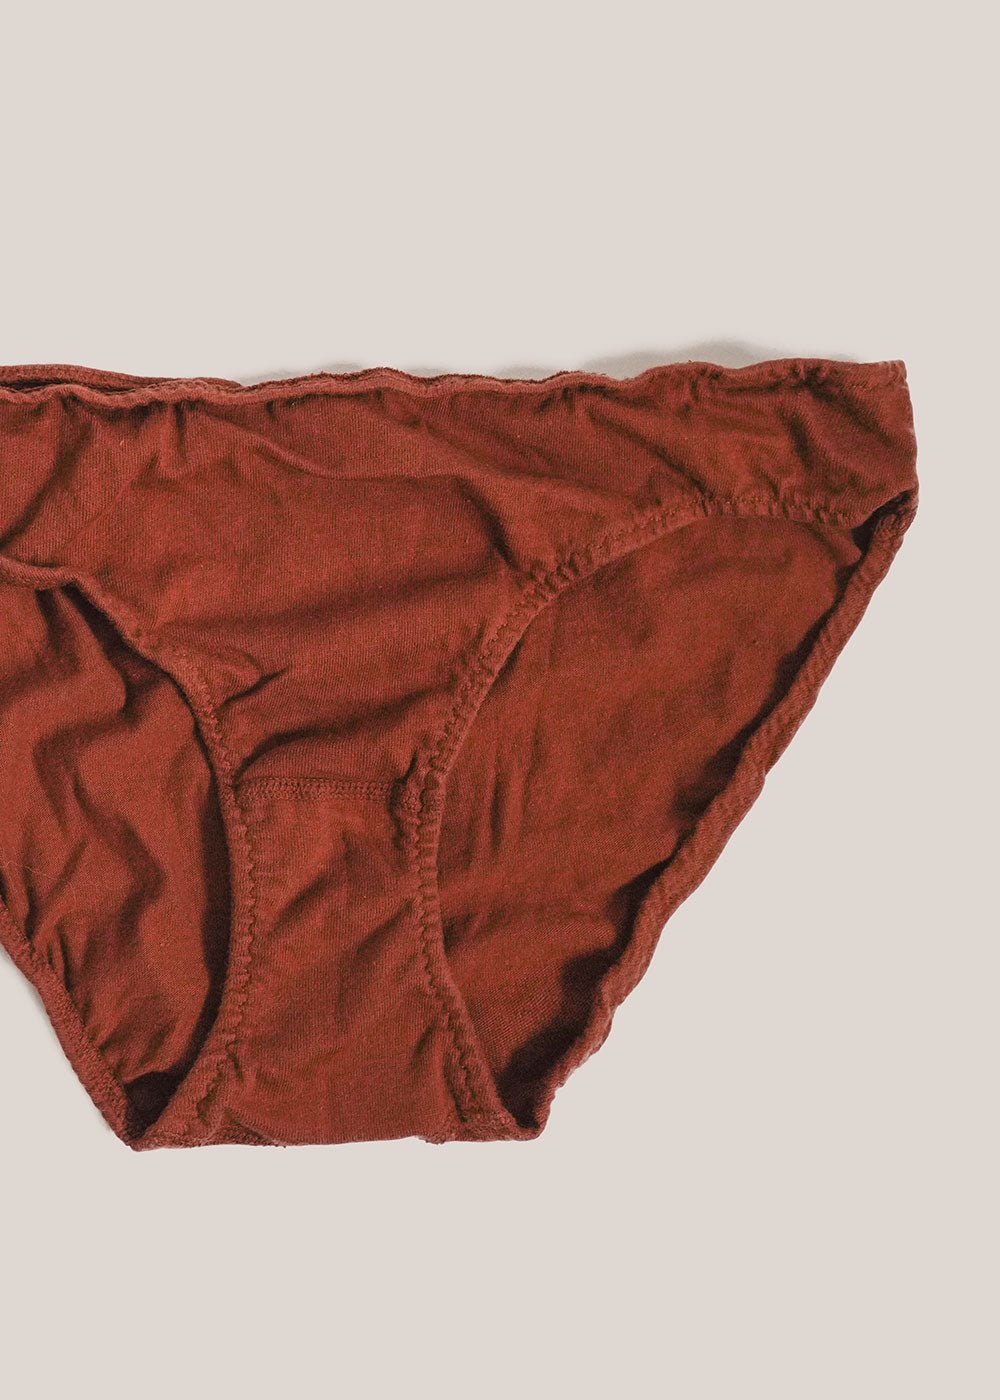 ECO Women's Boxer Panties, Eco Cotton